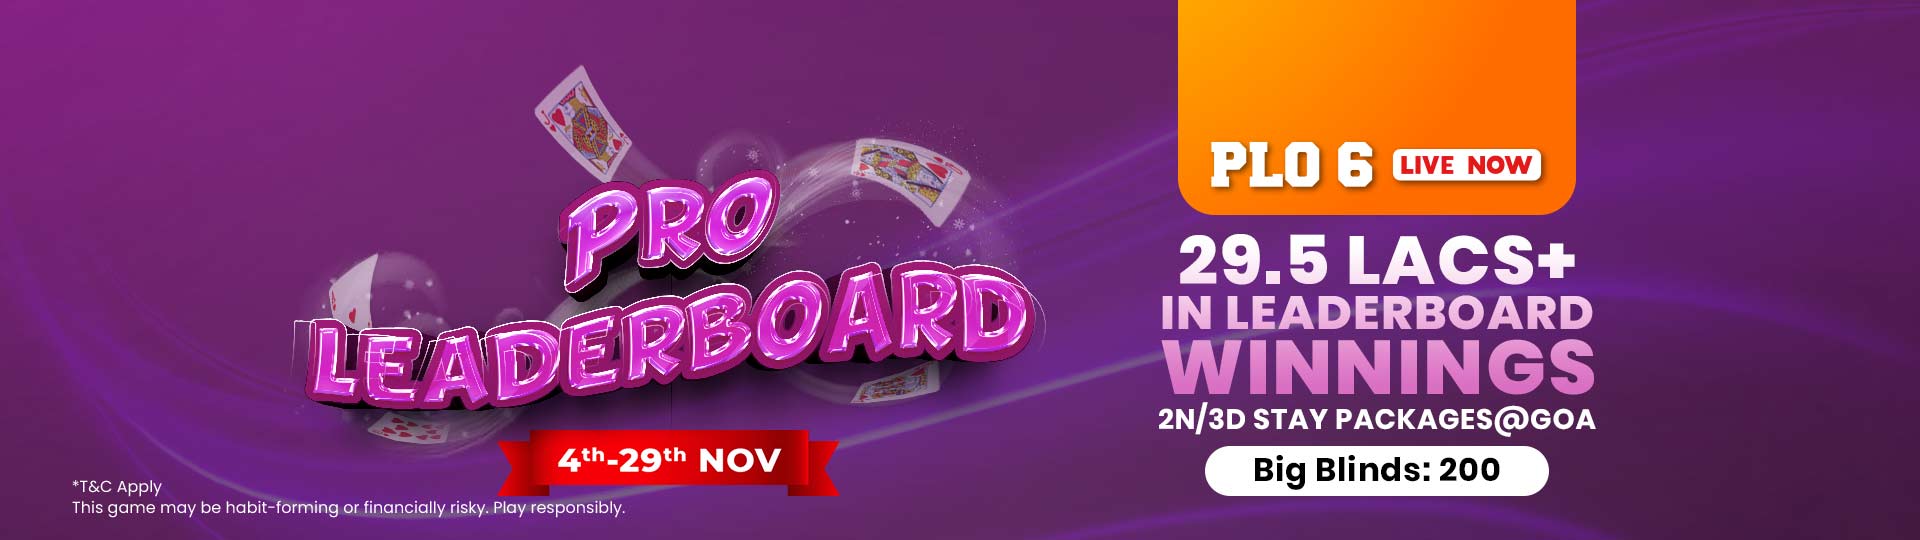 Adda52|Online|Poker|Pro Leaderboard|November